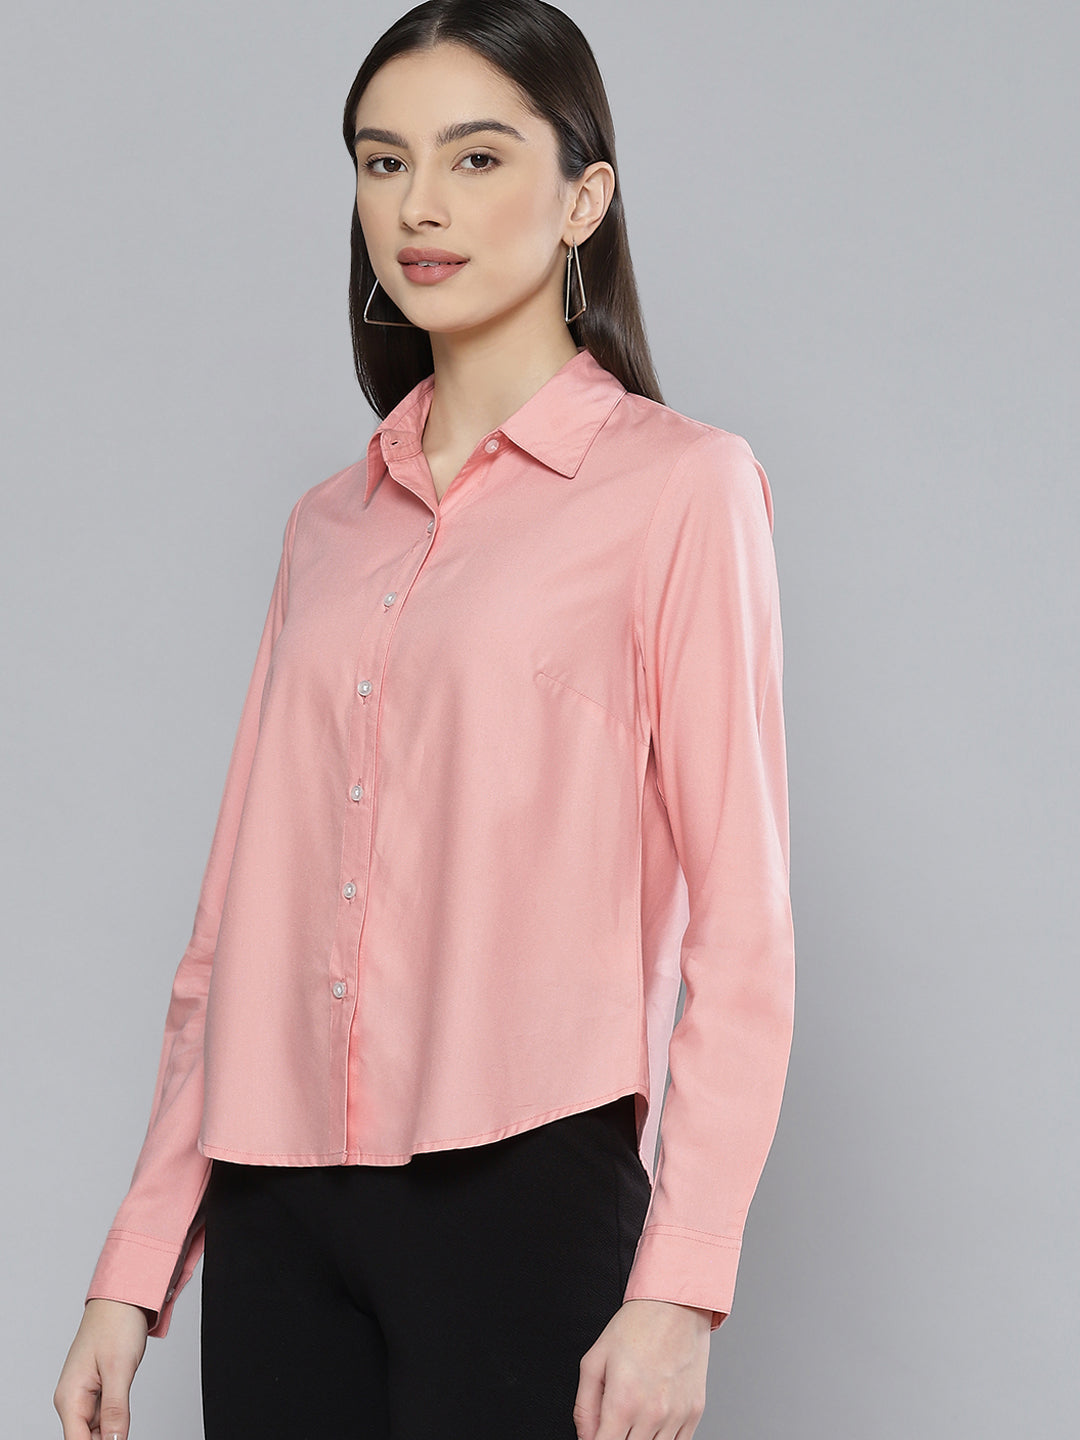 DENNISON Women Pink Solid Formal Shirt